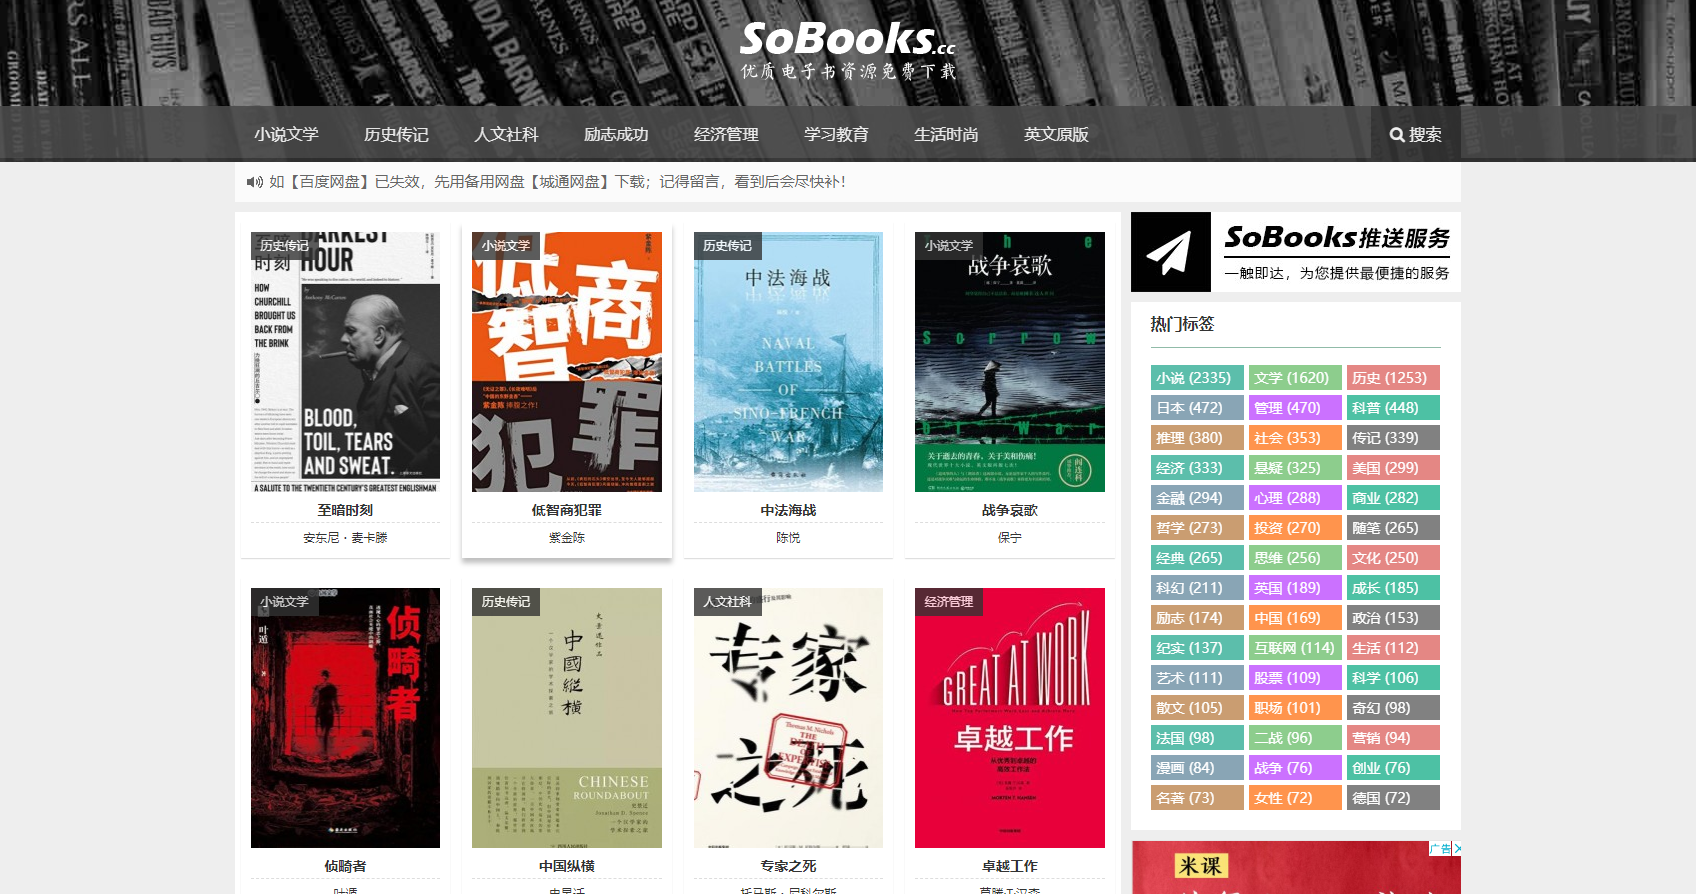 Sobooks,sobook,好书推荐,电子书下载,免费电子书,电子书资源,推荐一本好书,sobooks网站